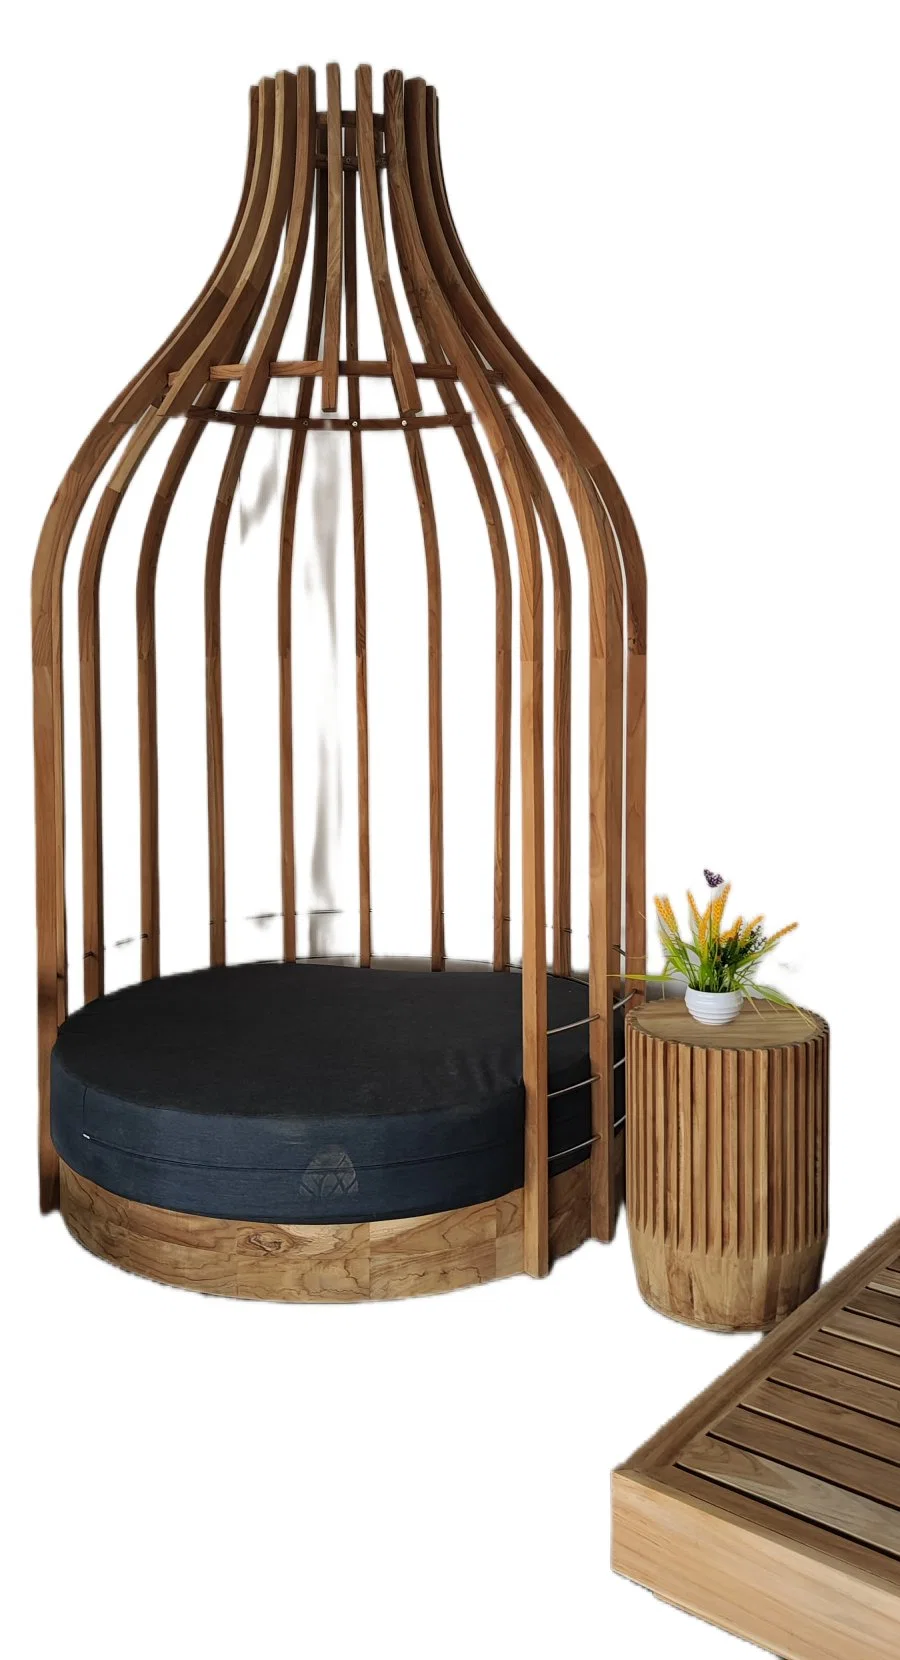 Contemporary All Weather Teak Wood Swivel Lounge Chair Furniture Patio Garden Outdoor Sofa Set